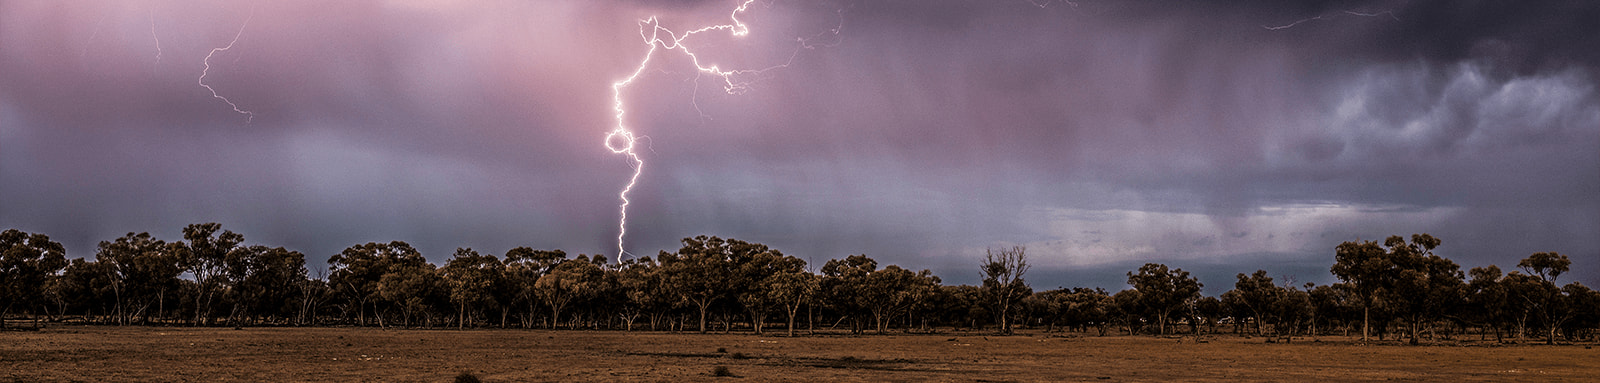 Lightning strike in country landscape